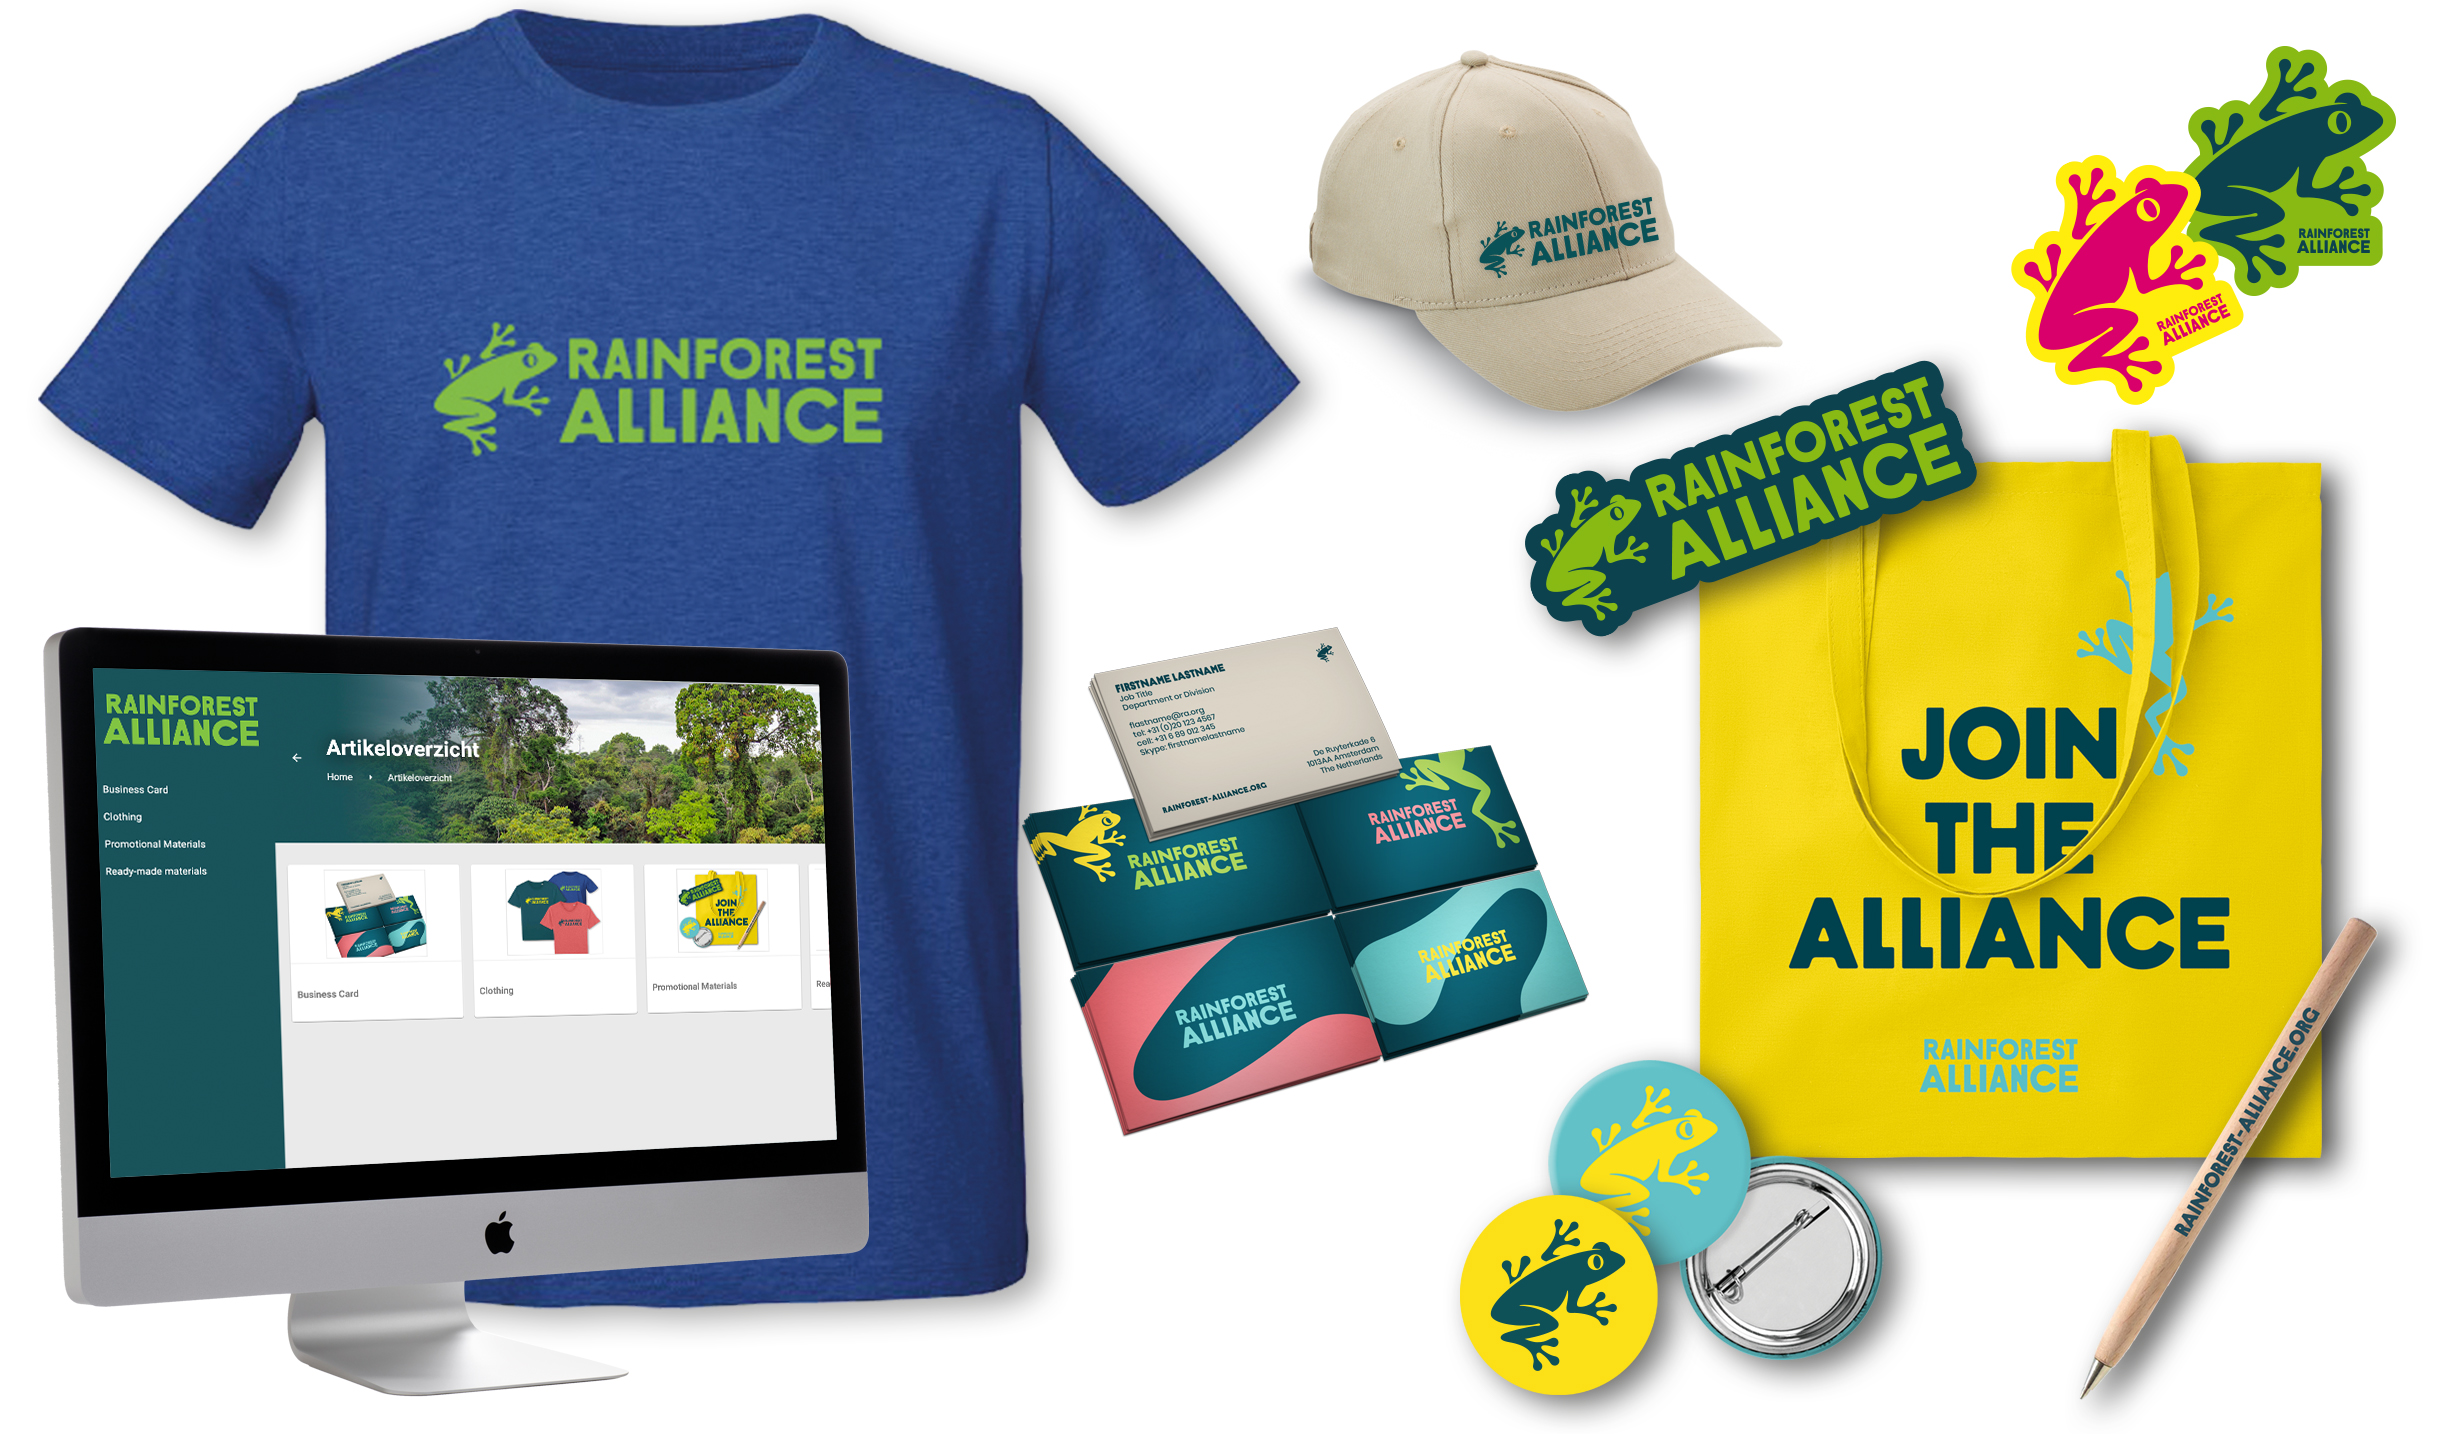 Rainforest Alliance case - Promotiematerialen